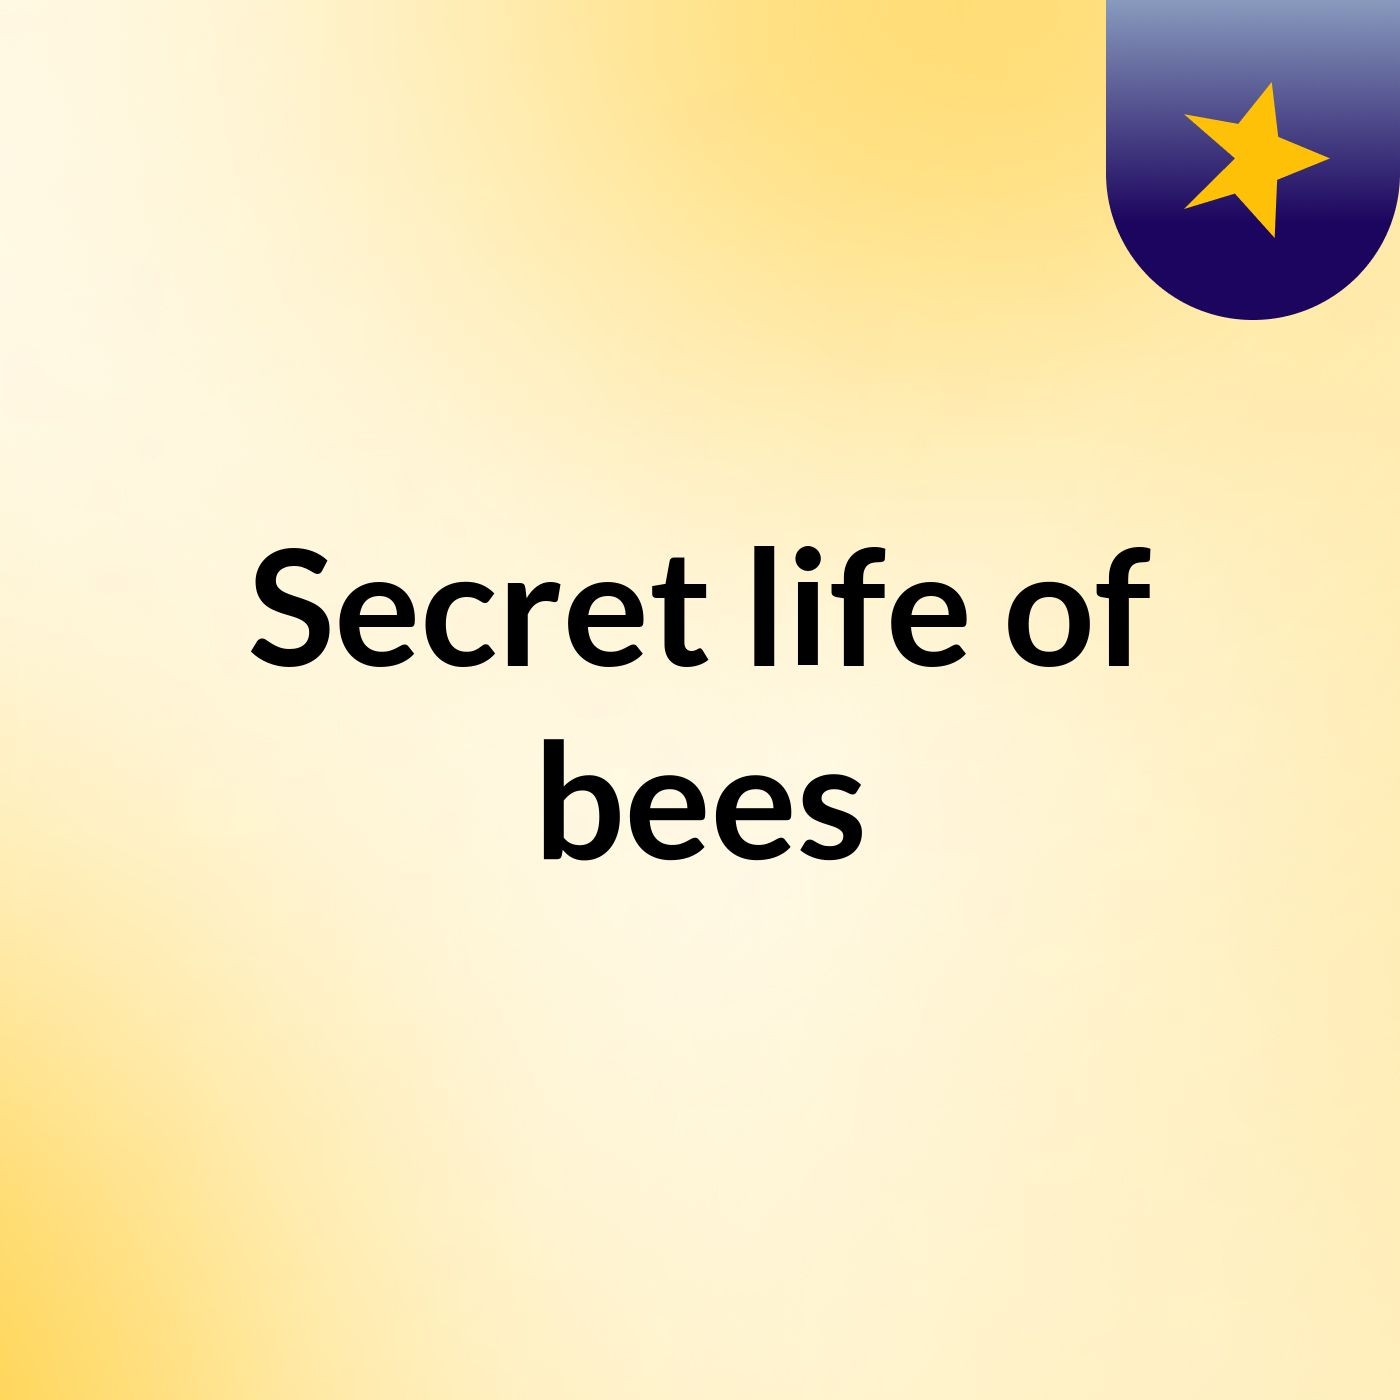 Secret life of bees